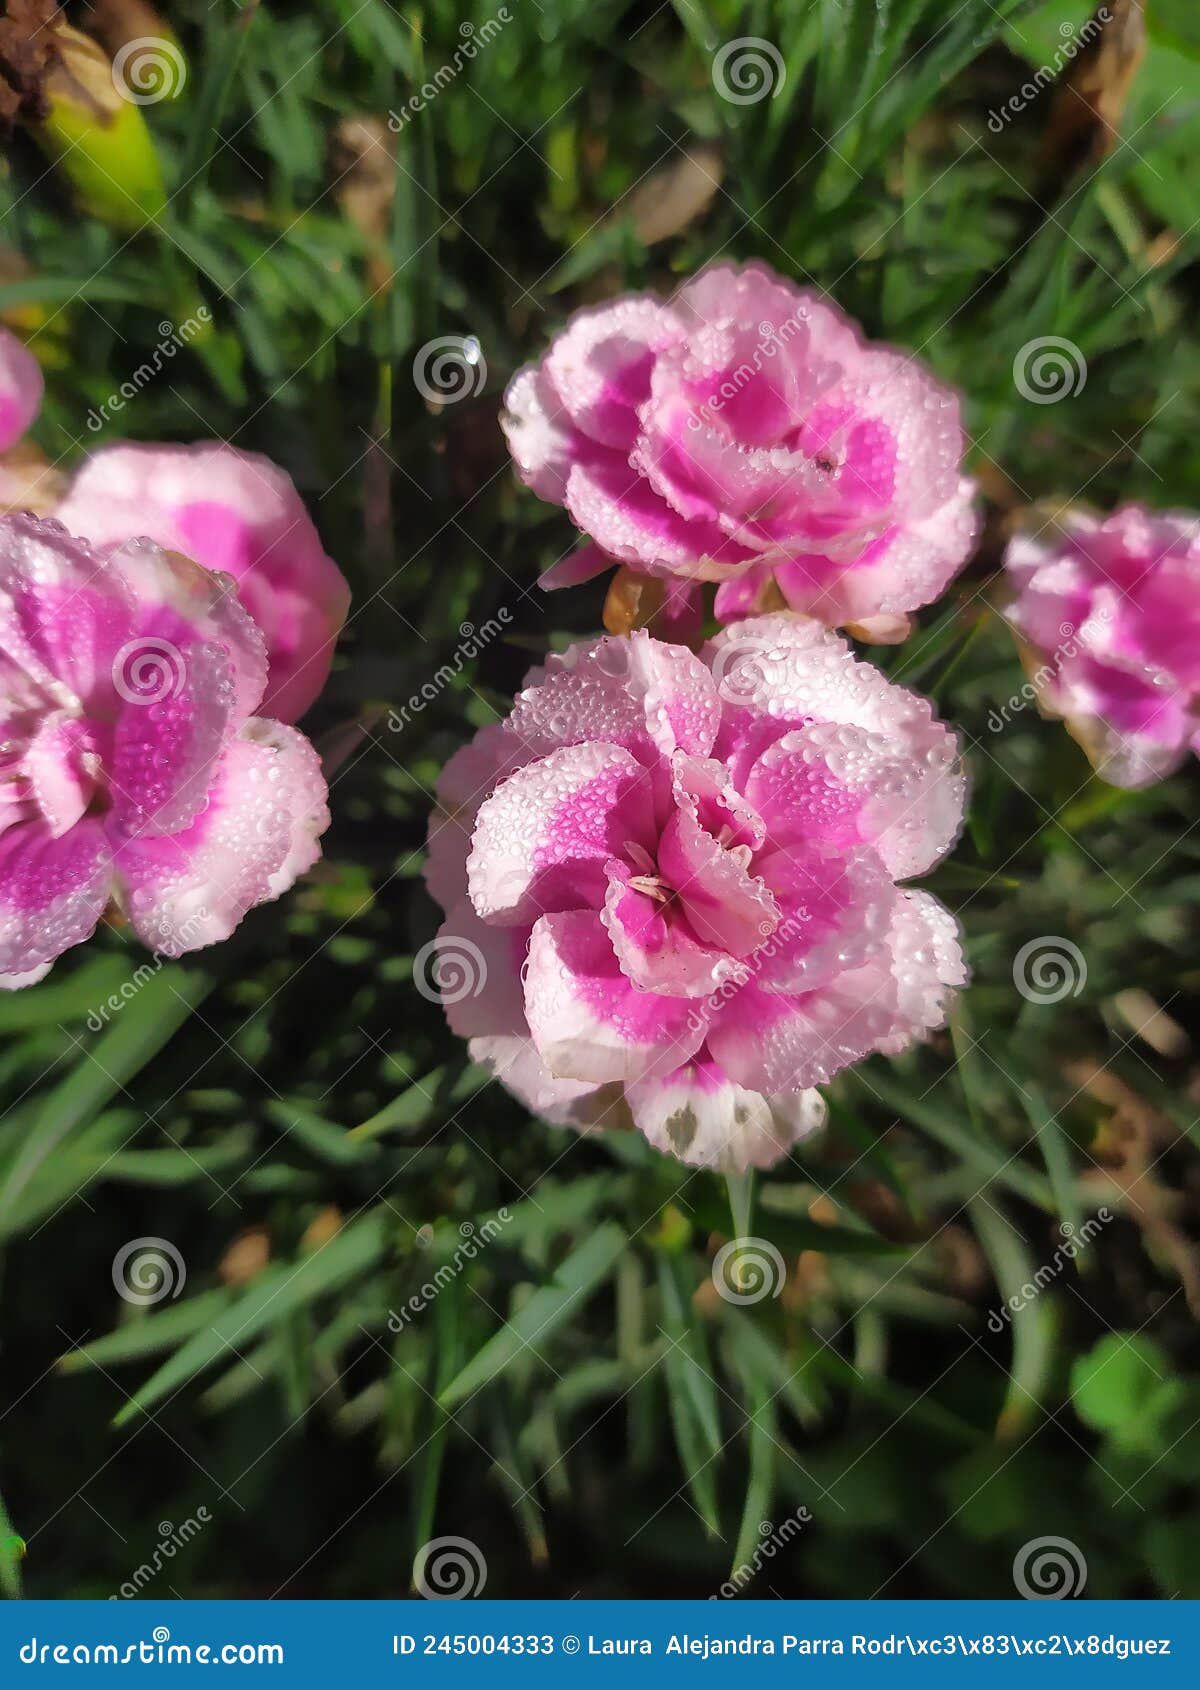 pinks dianthus clavel with dew drops. un grupo de claveles rosados con gotas de rocÃÂ­o